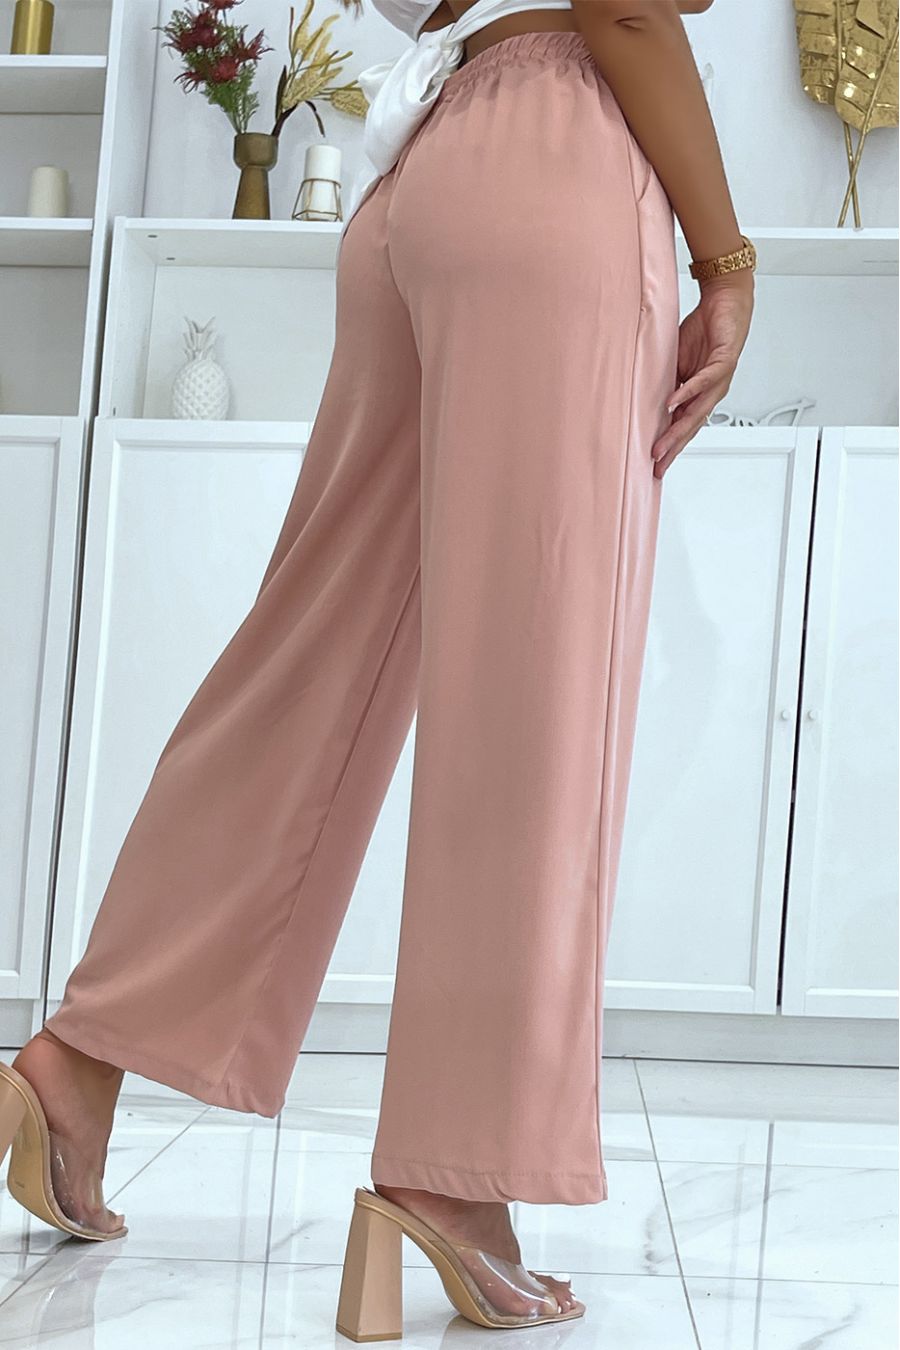 Madame Pink Plazo | Buy SIZE 26 Plazo Online for | Glamly